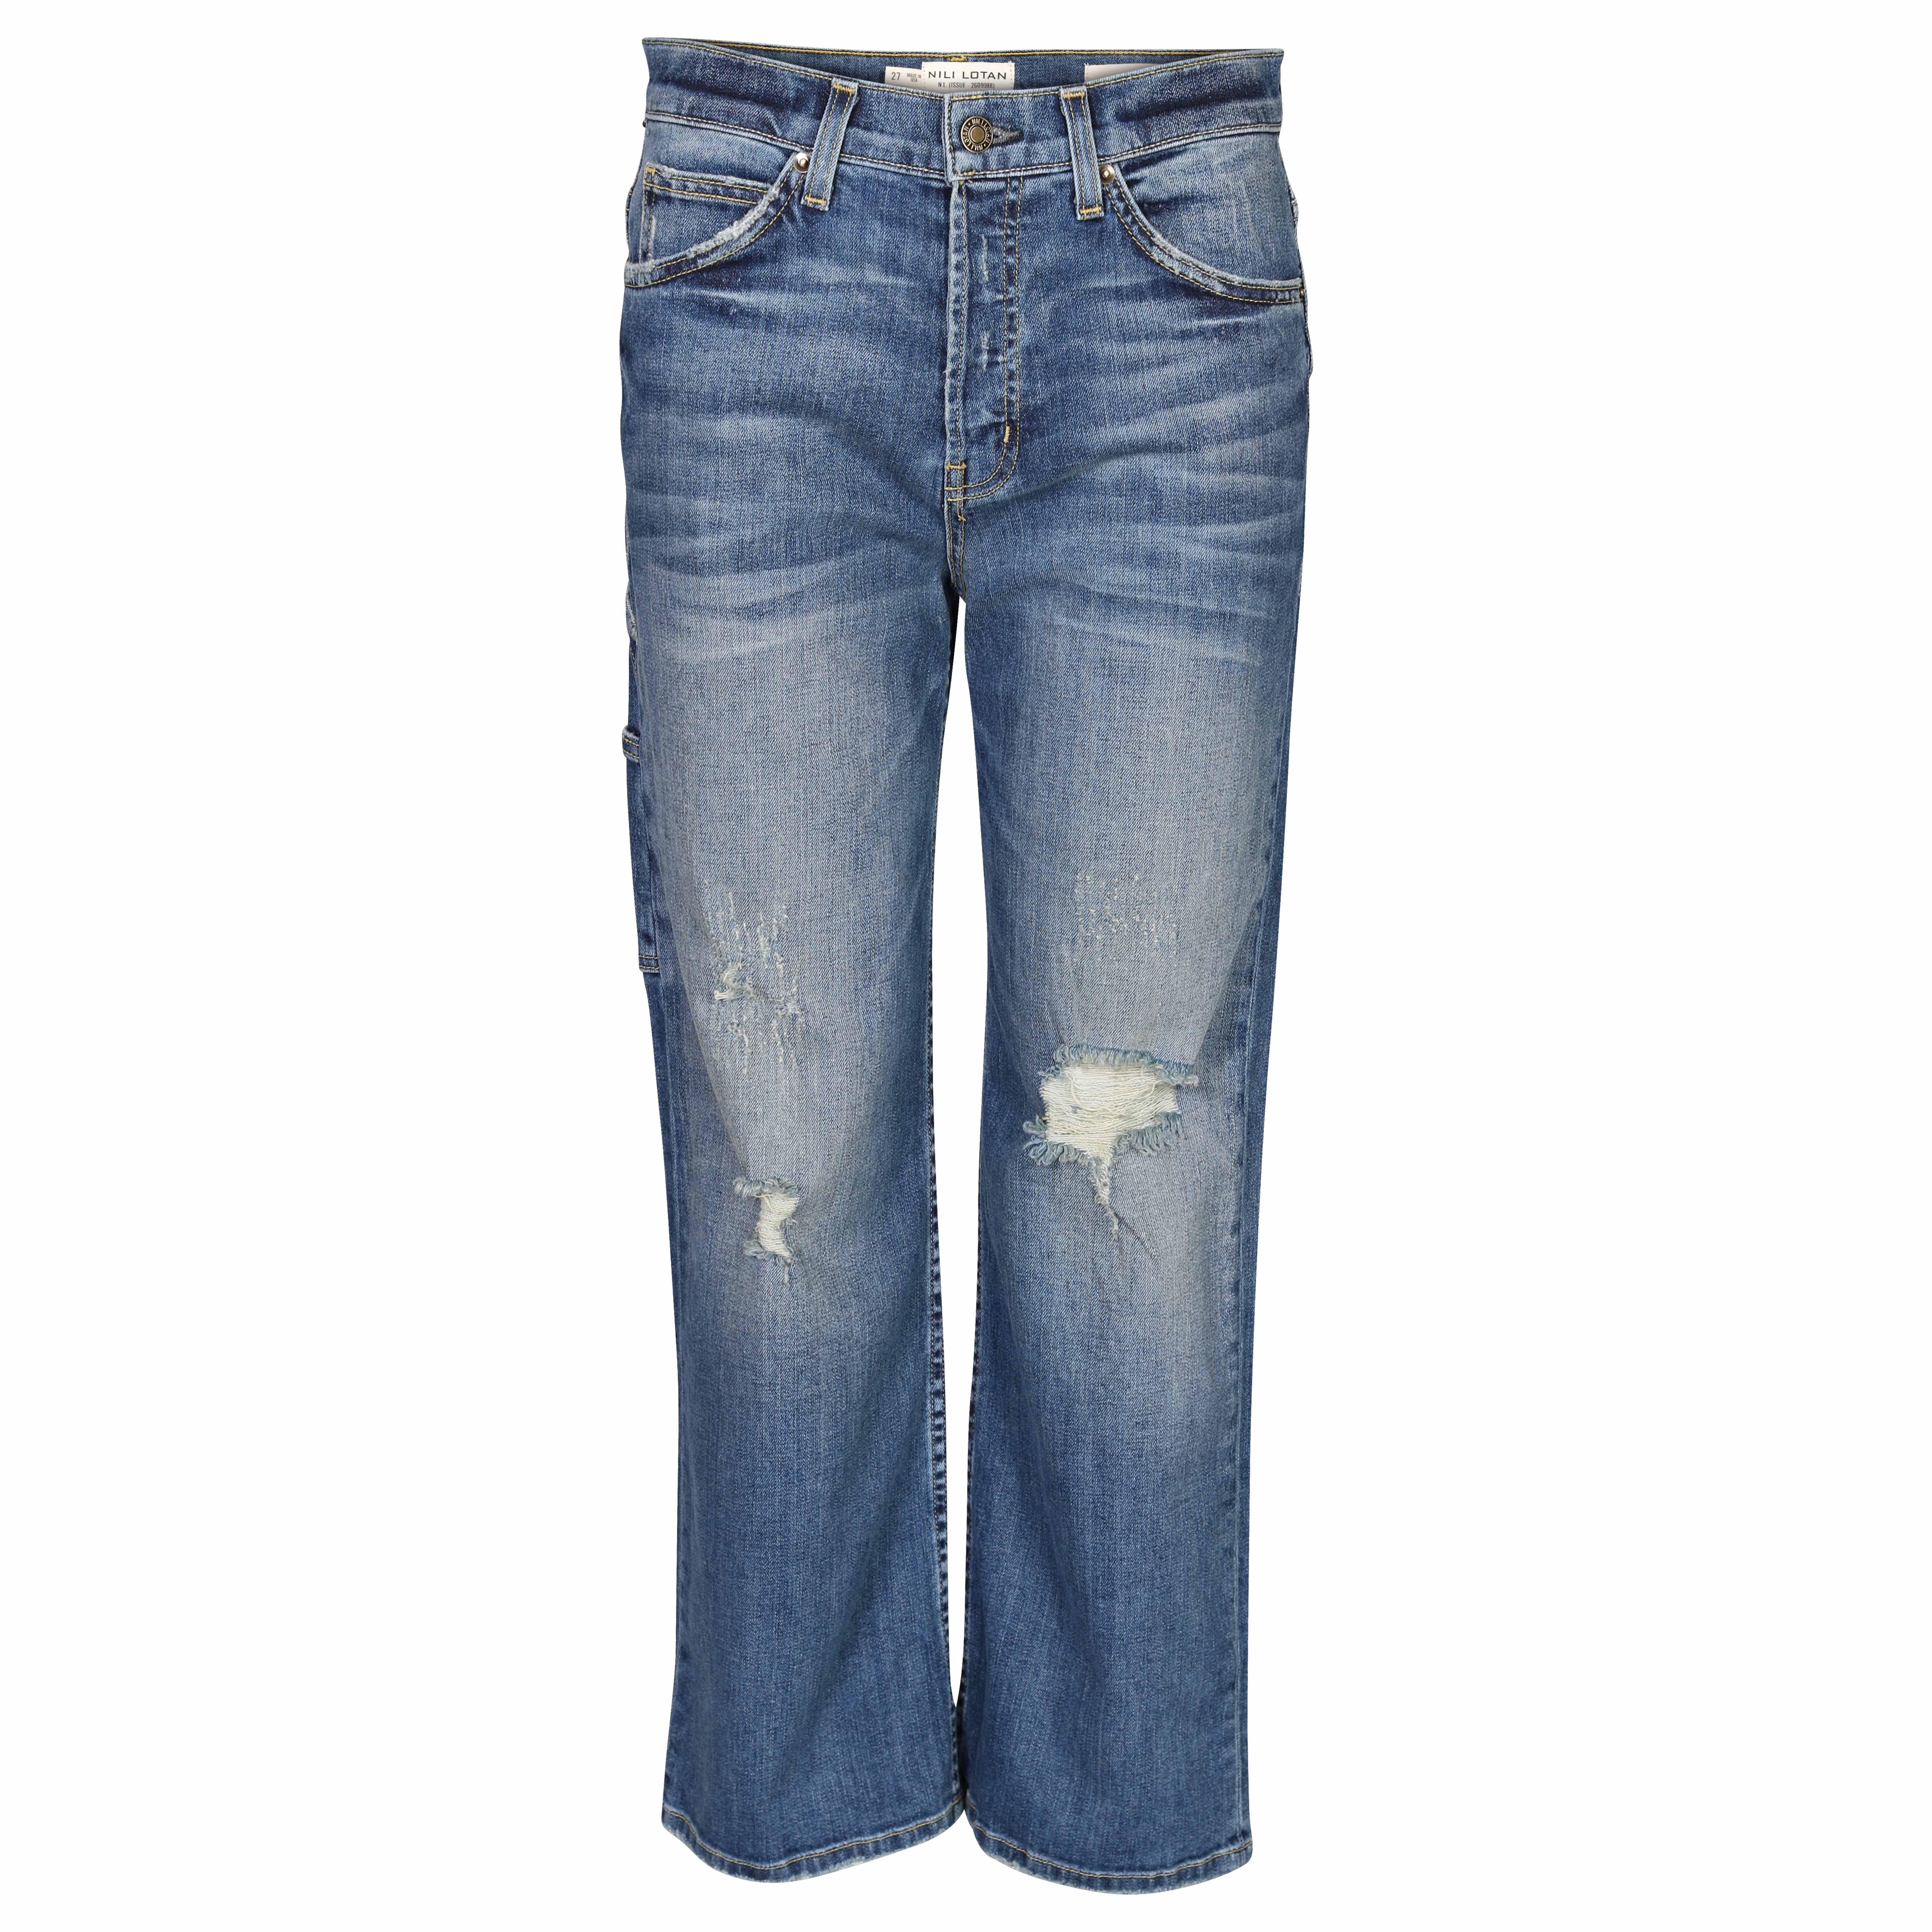 Nili Lotan Violette Jeans in Classic Wash 30